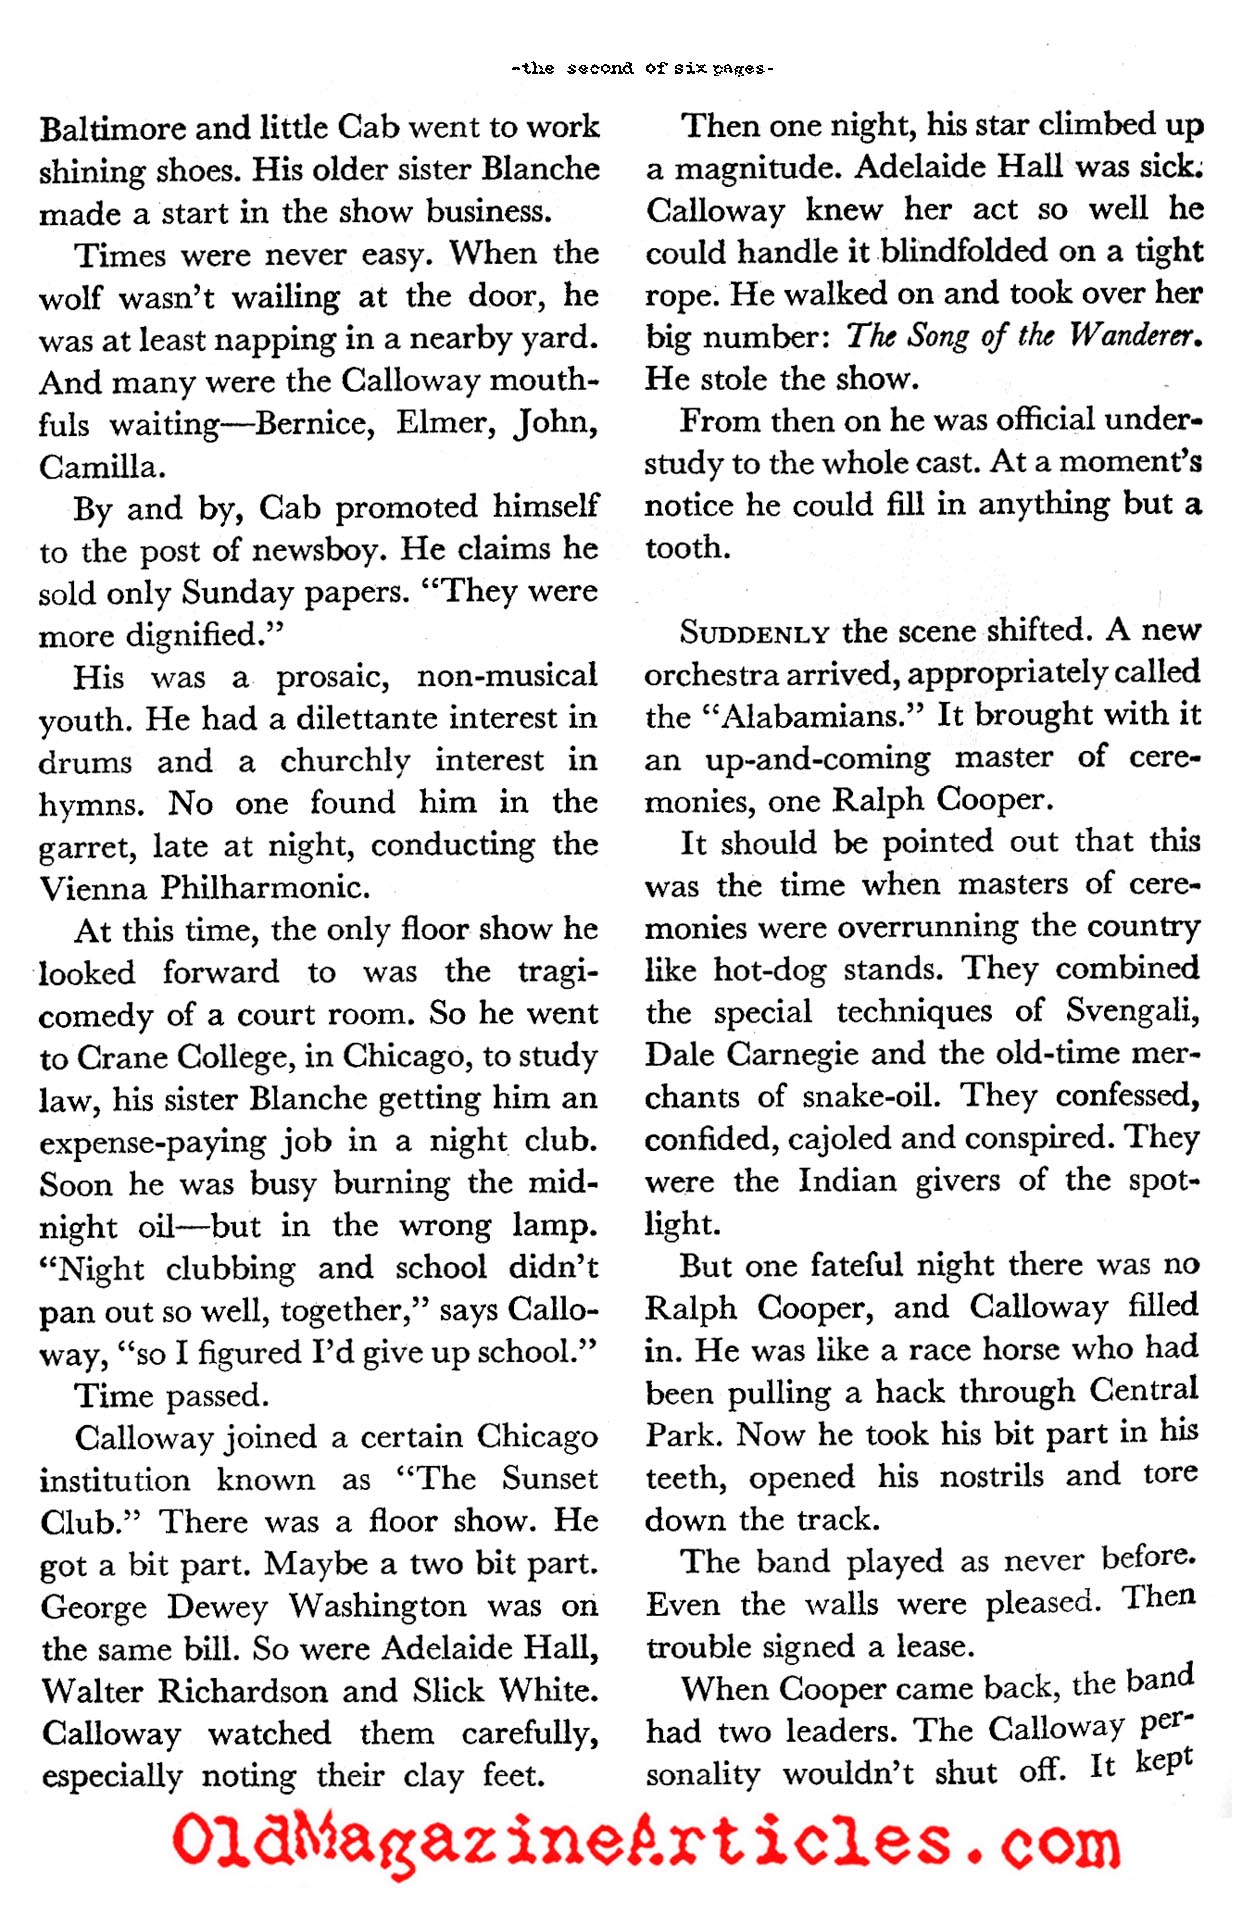 Big Bandleader Cab Calloway (Coronet Magazine, 1941)